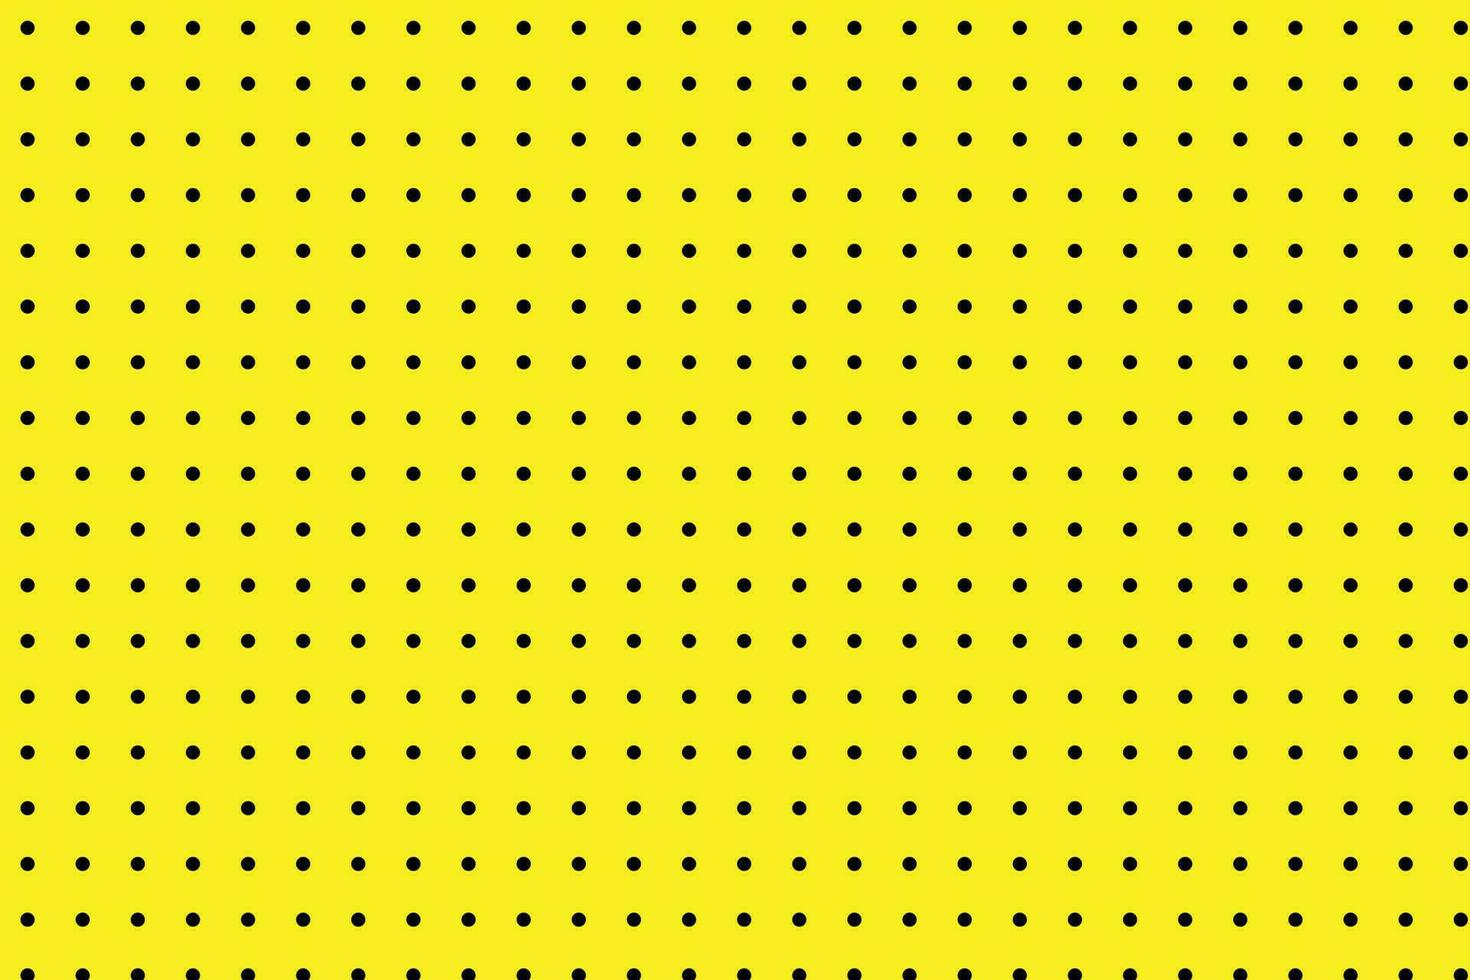 abstrakt nahtlos Polka Punkt Gitter Muster mit Gelb Hintergrund. vektor